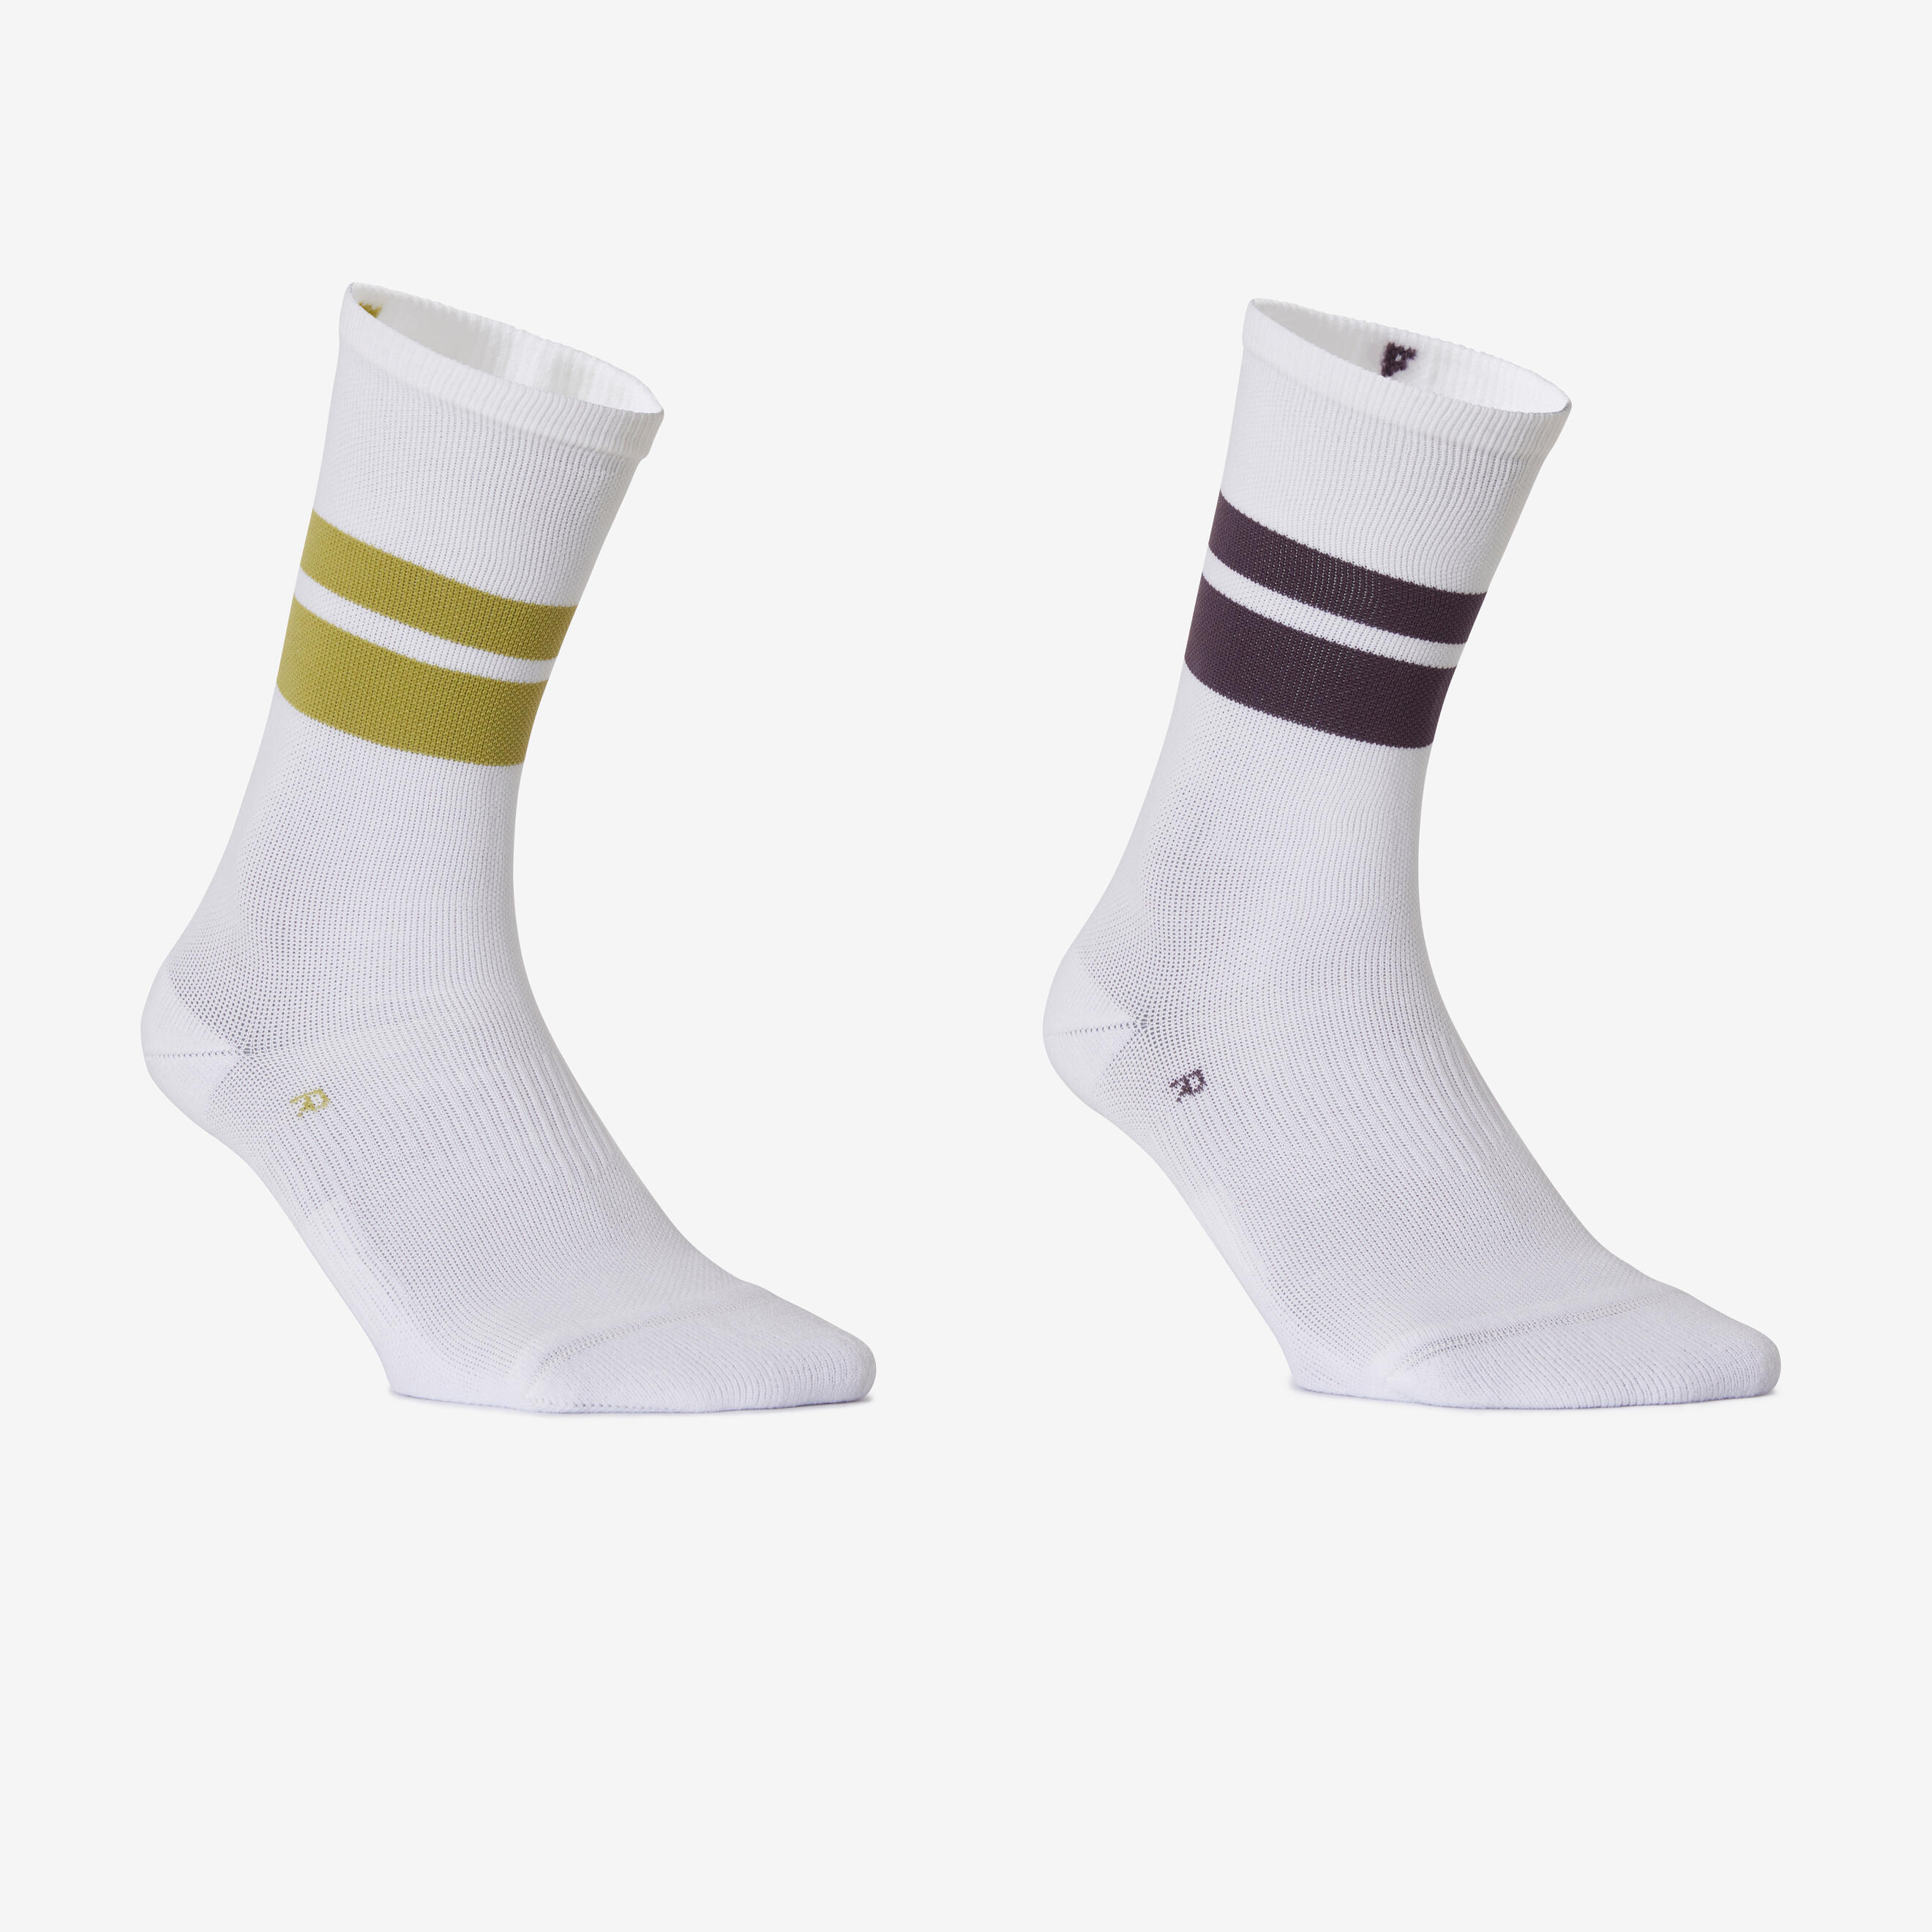 DOMYOS Mid-High Fitness Cardio Training Socks Twin-Pack